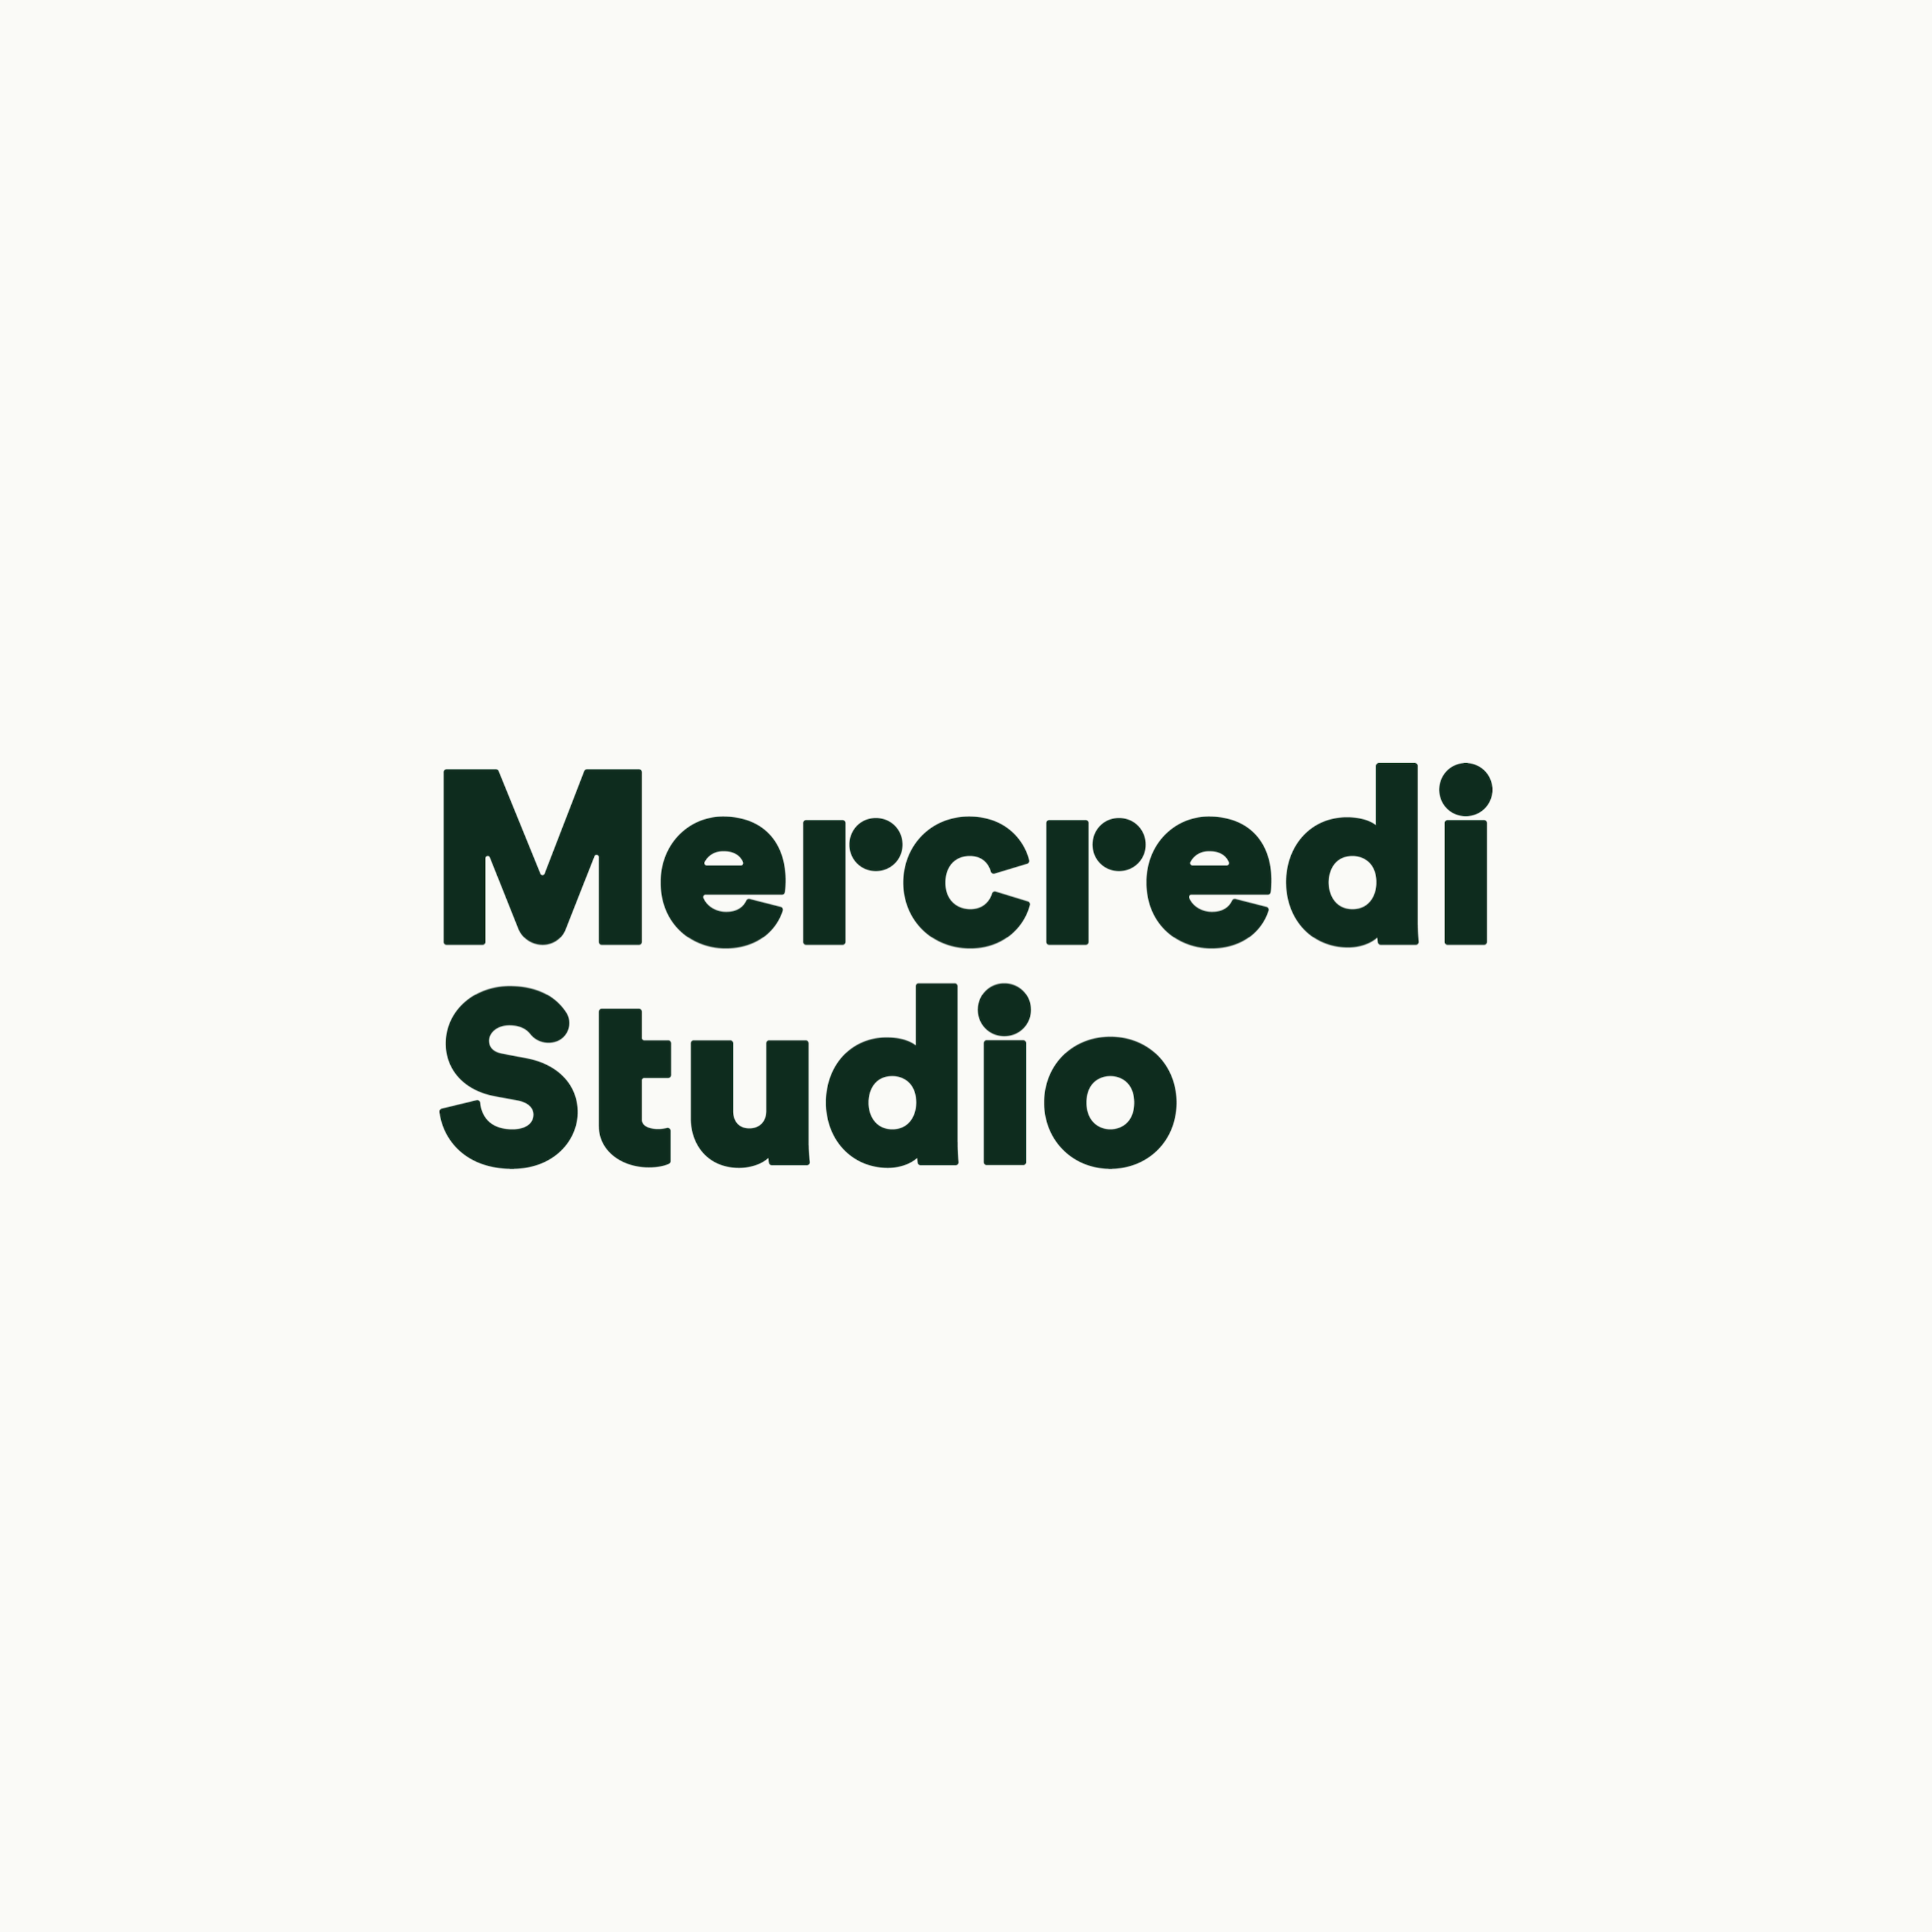 Mercredi Studio